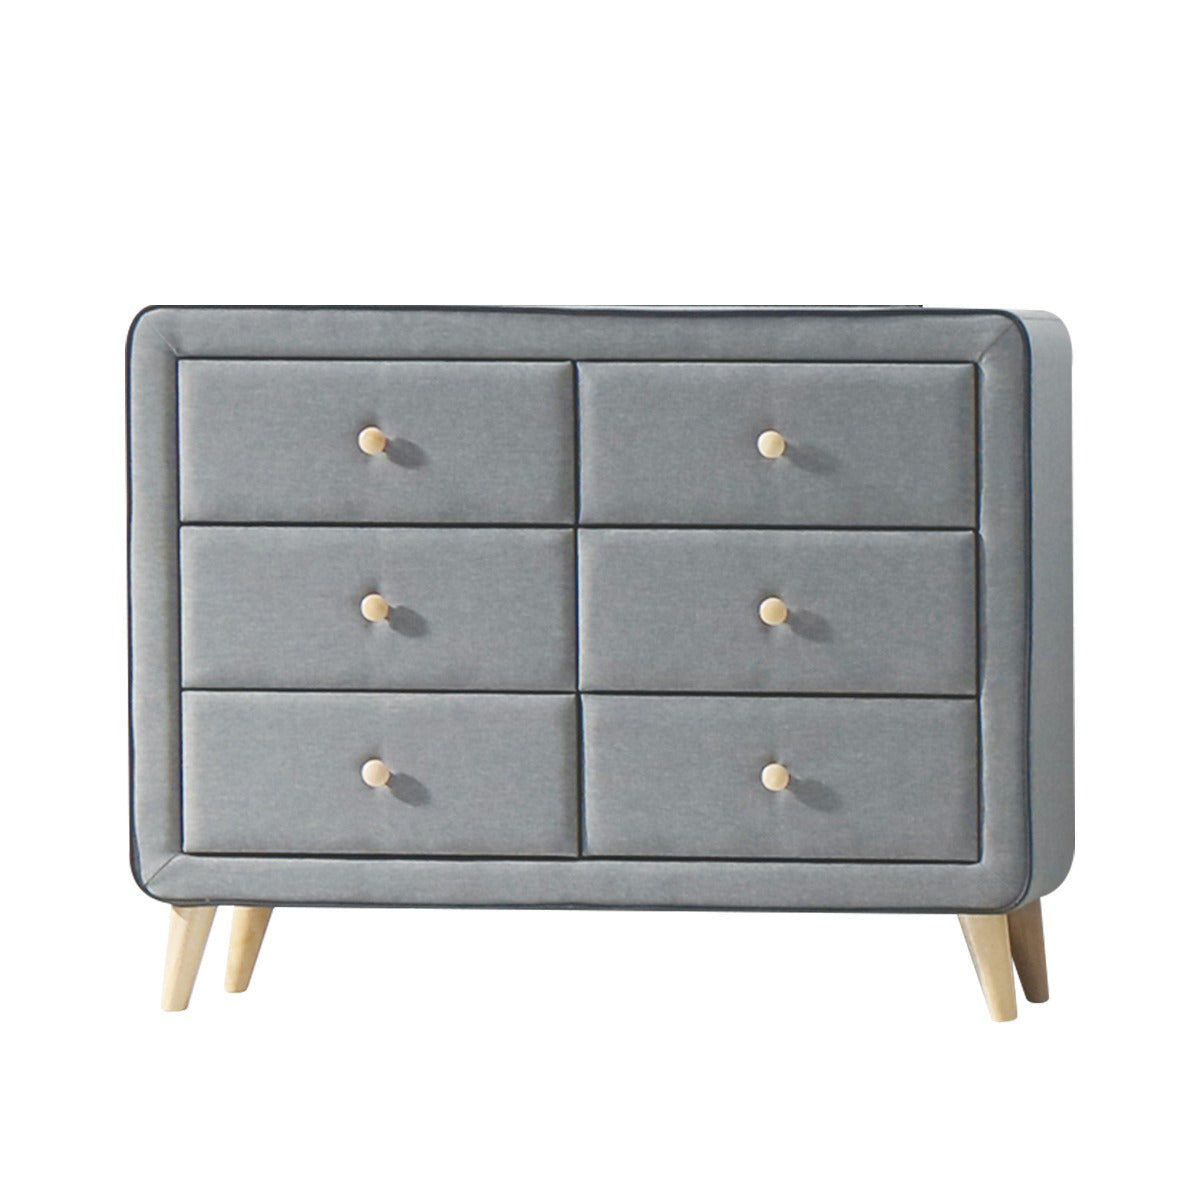 ACME Furniture Dressers - Valda Dresser, Light Gray Fabric